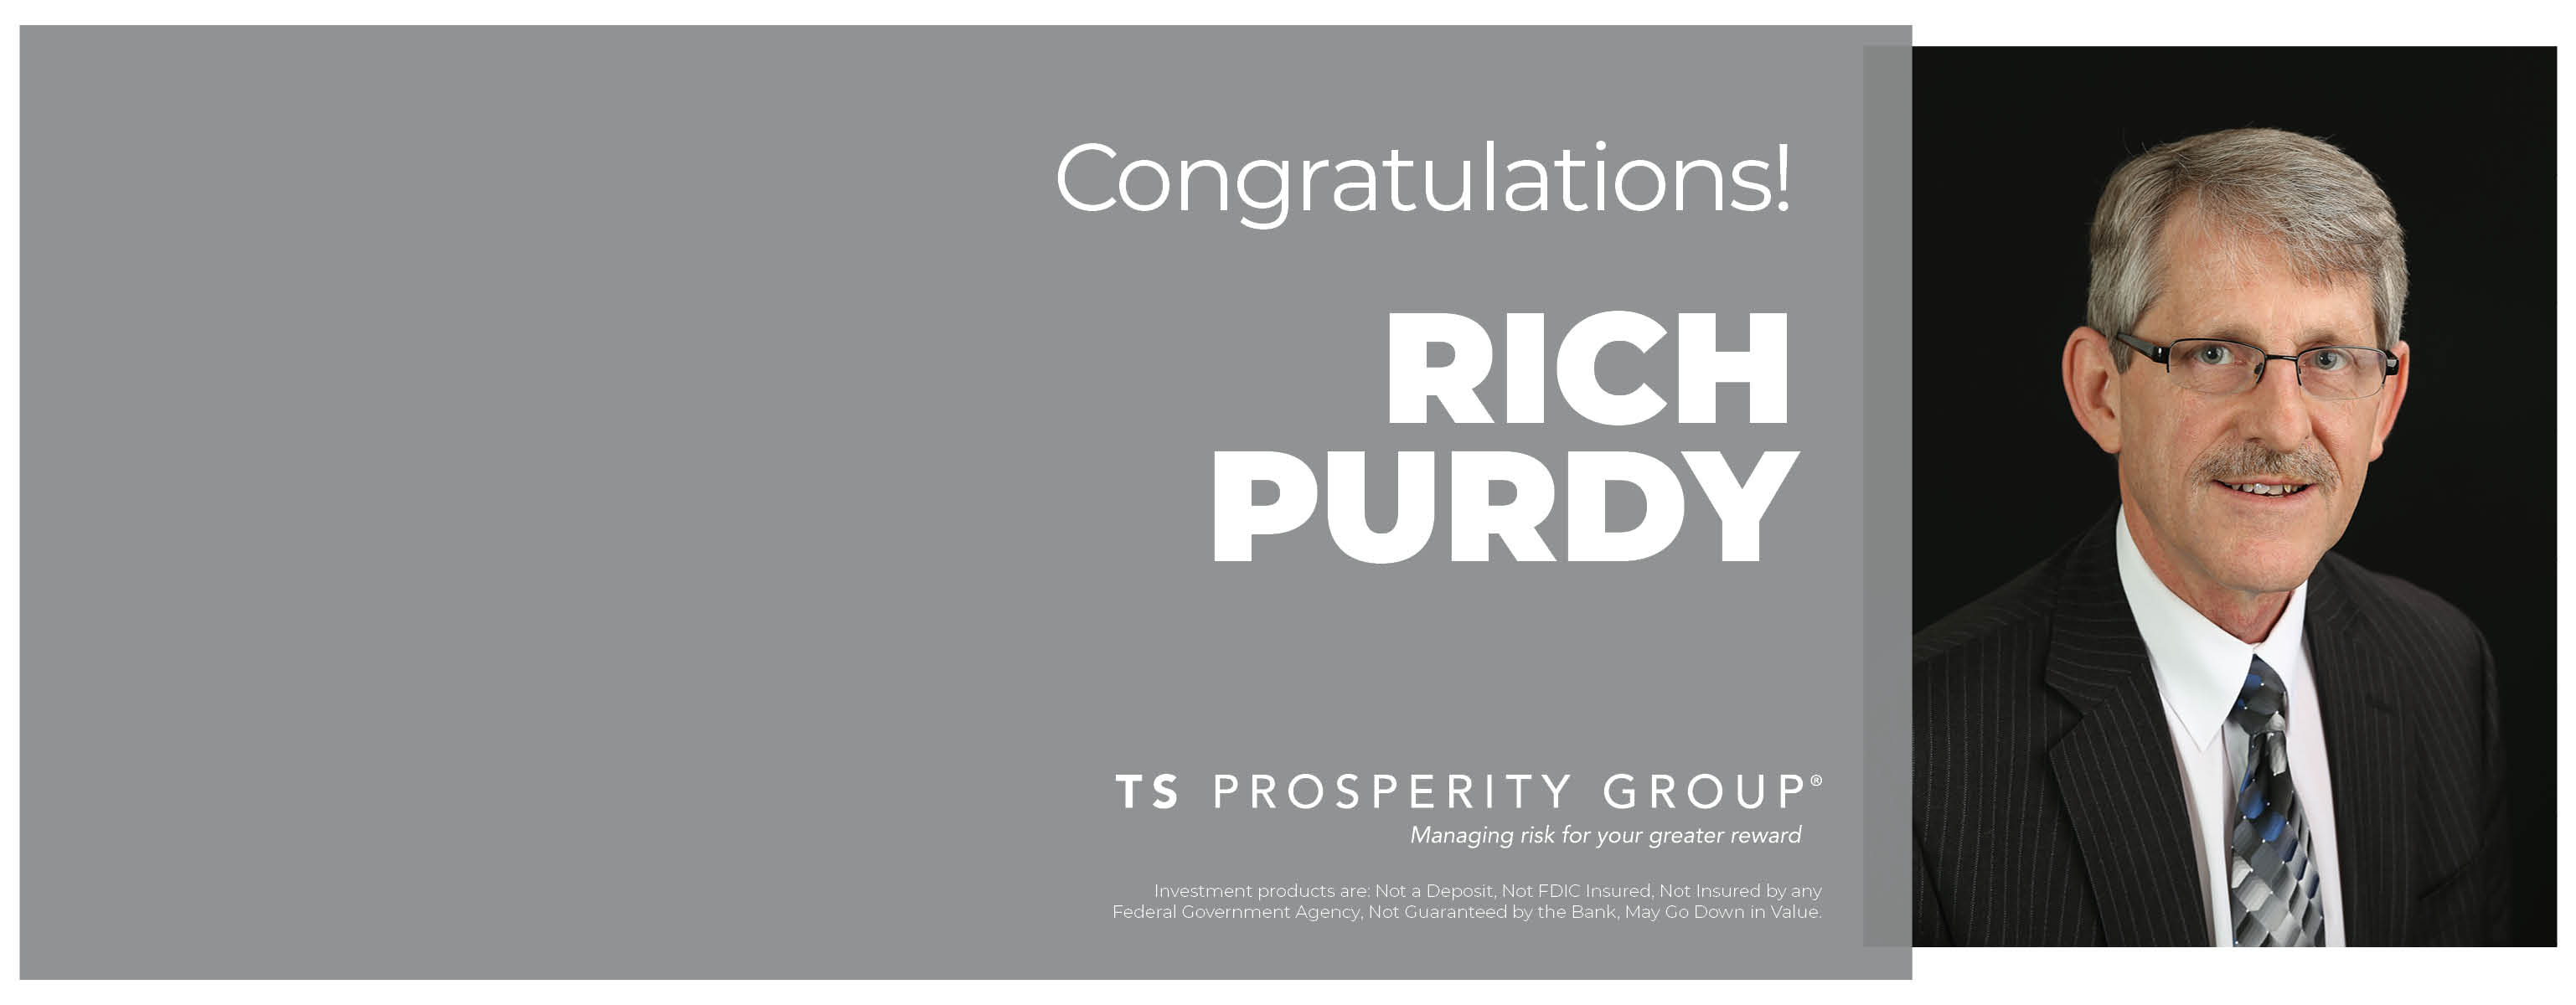 Congratulations Rich Purdy